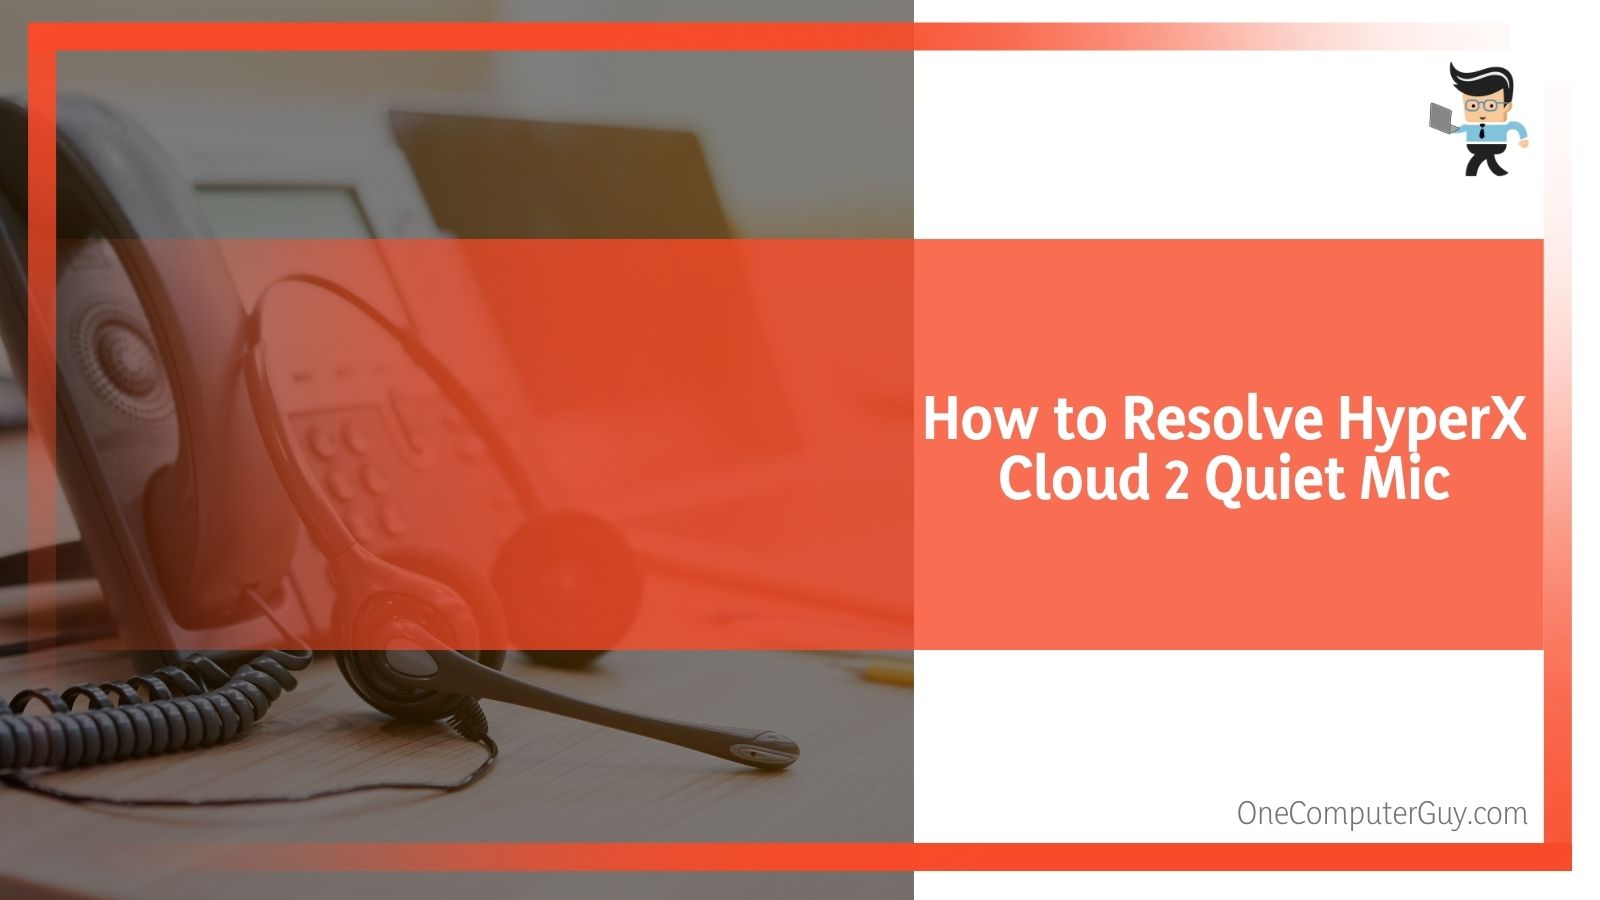 How to Resolve HyperX Cloud 2 Quiet Mic